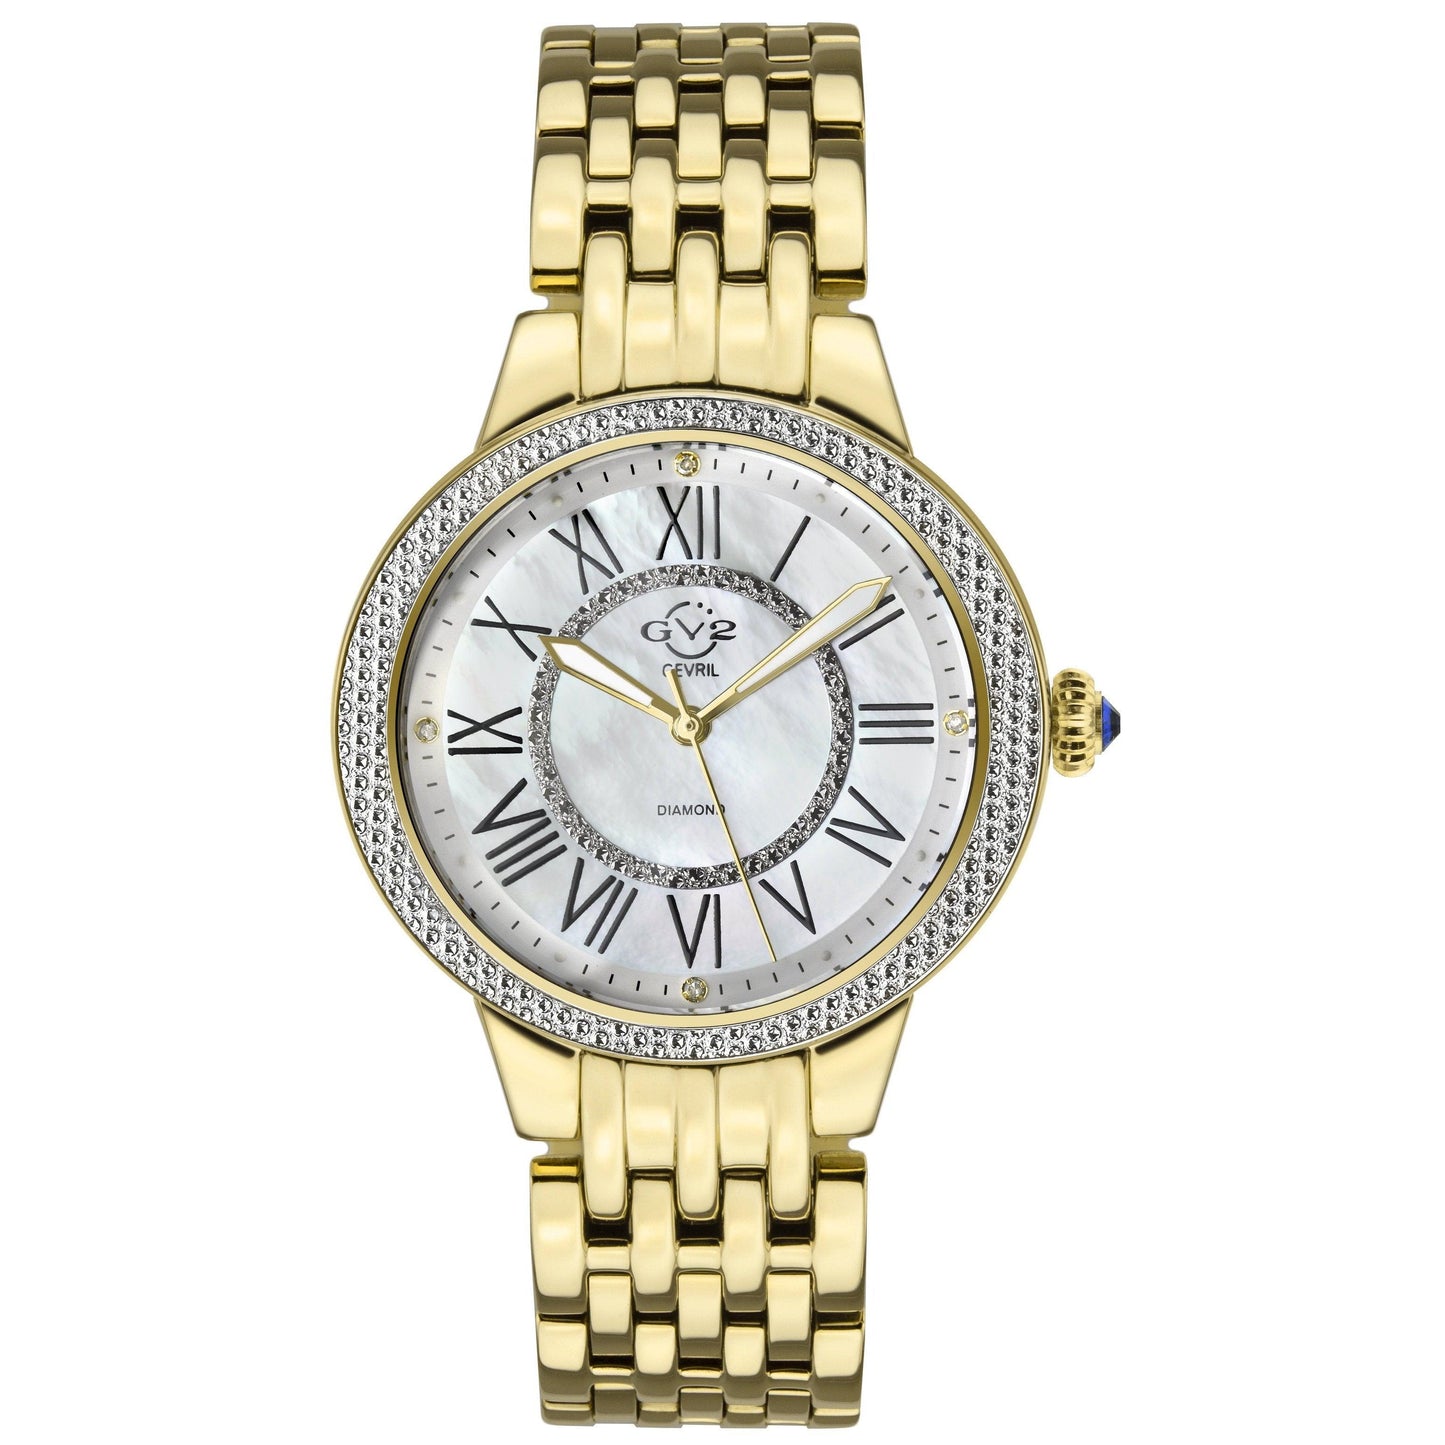 Gevril-Luxury-Swiss-Watches-GV2 Astor II Diamond-9142